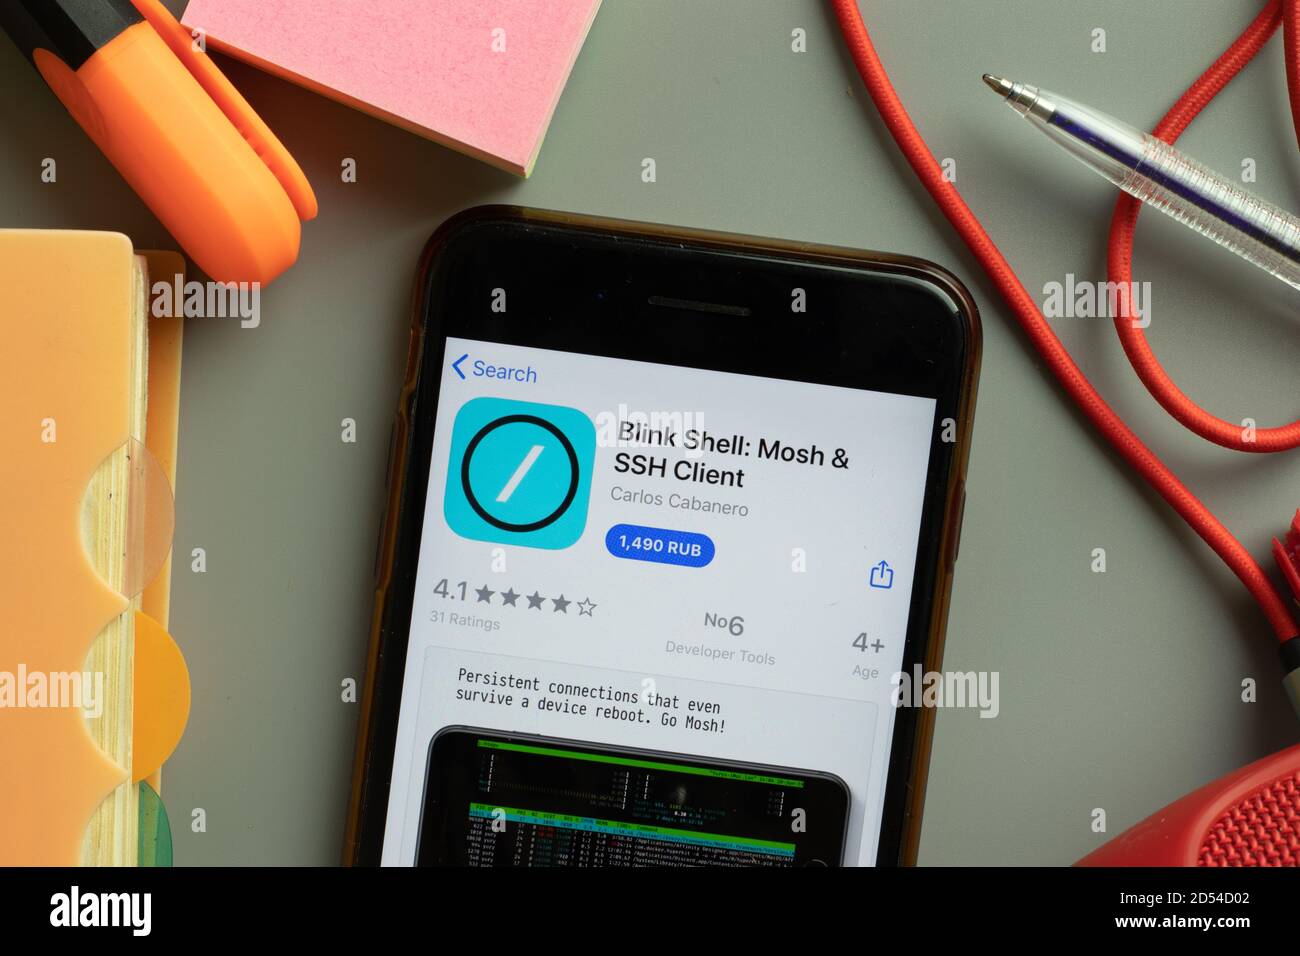 New York, USA - 28. September 2020: Blink Shell mosh und SSH Client Mobile App Logo auf Handy-Bildschirm Nahaufnahme, illustrative Editorial Stockfoto